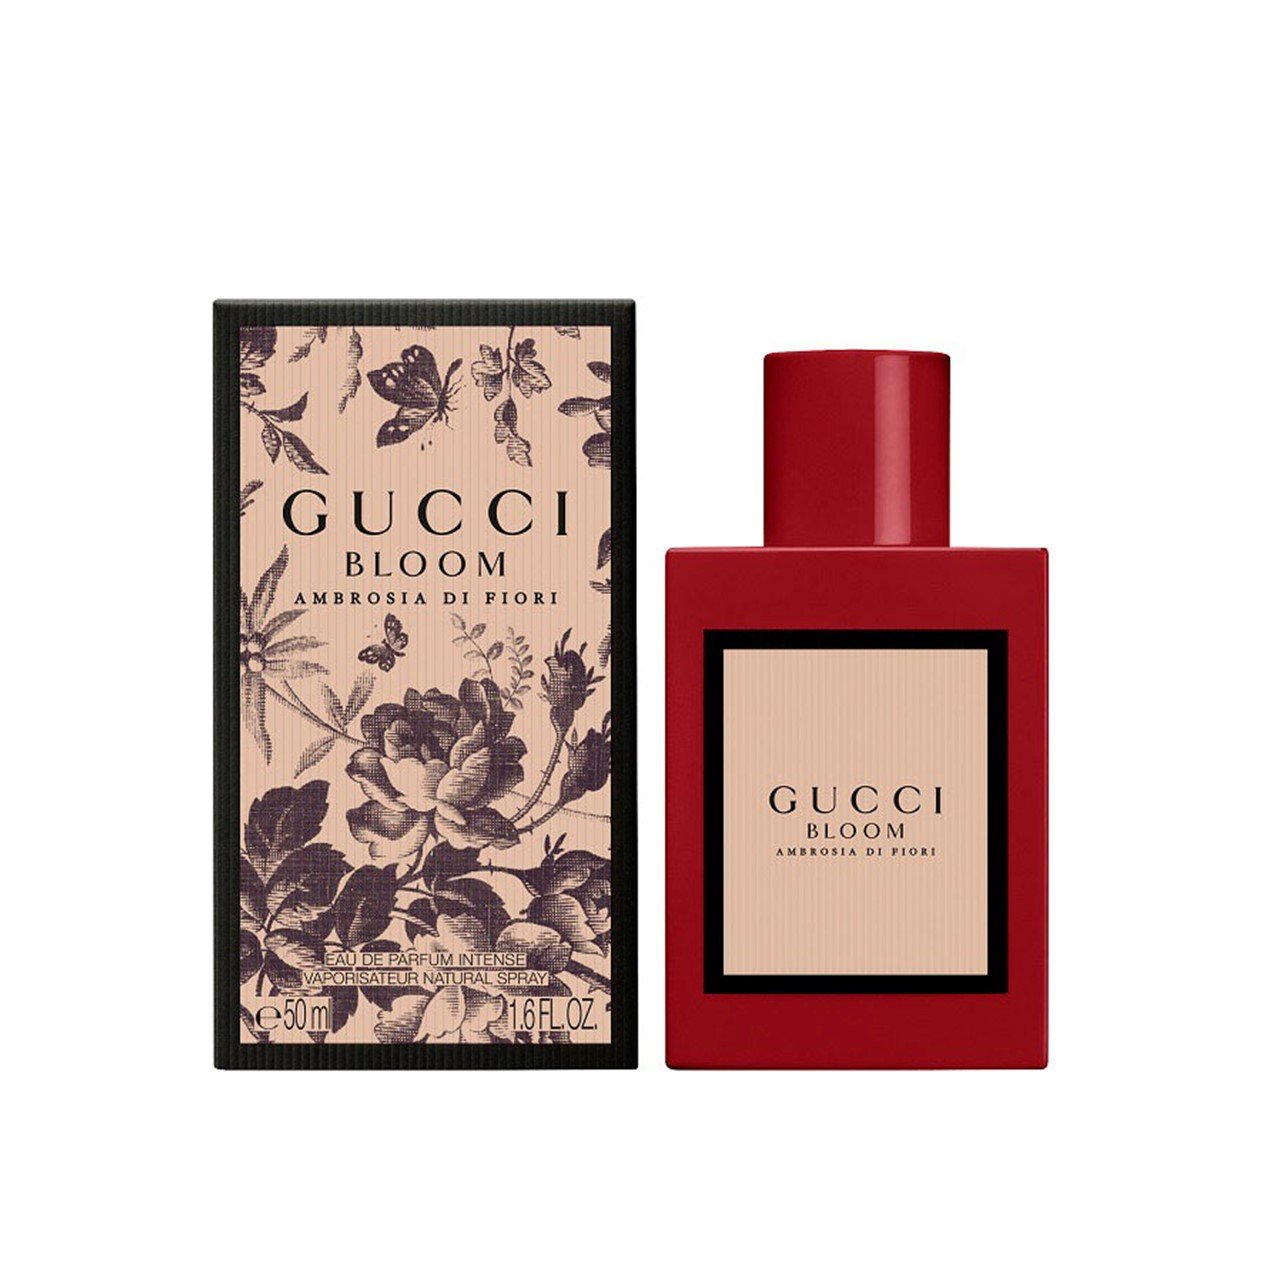 Gucci Bloom Ambrosia Di Fiori Eau de 